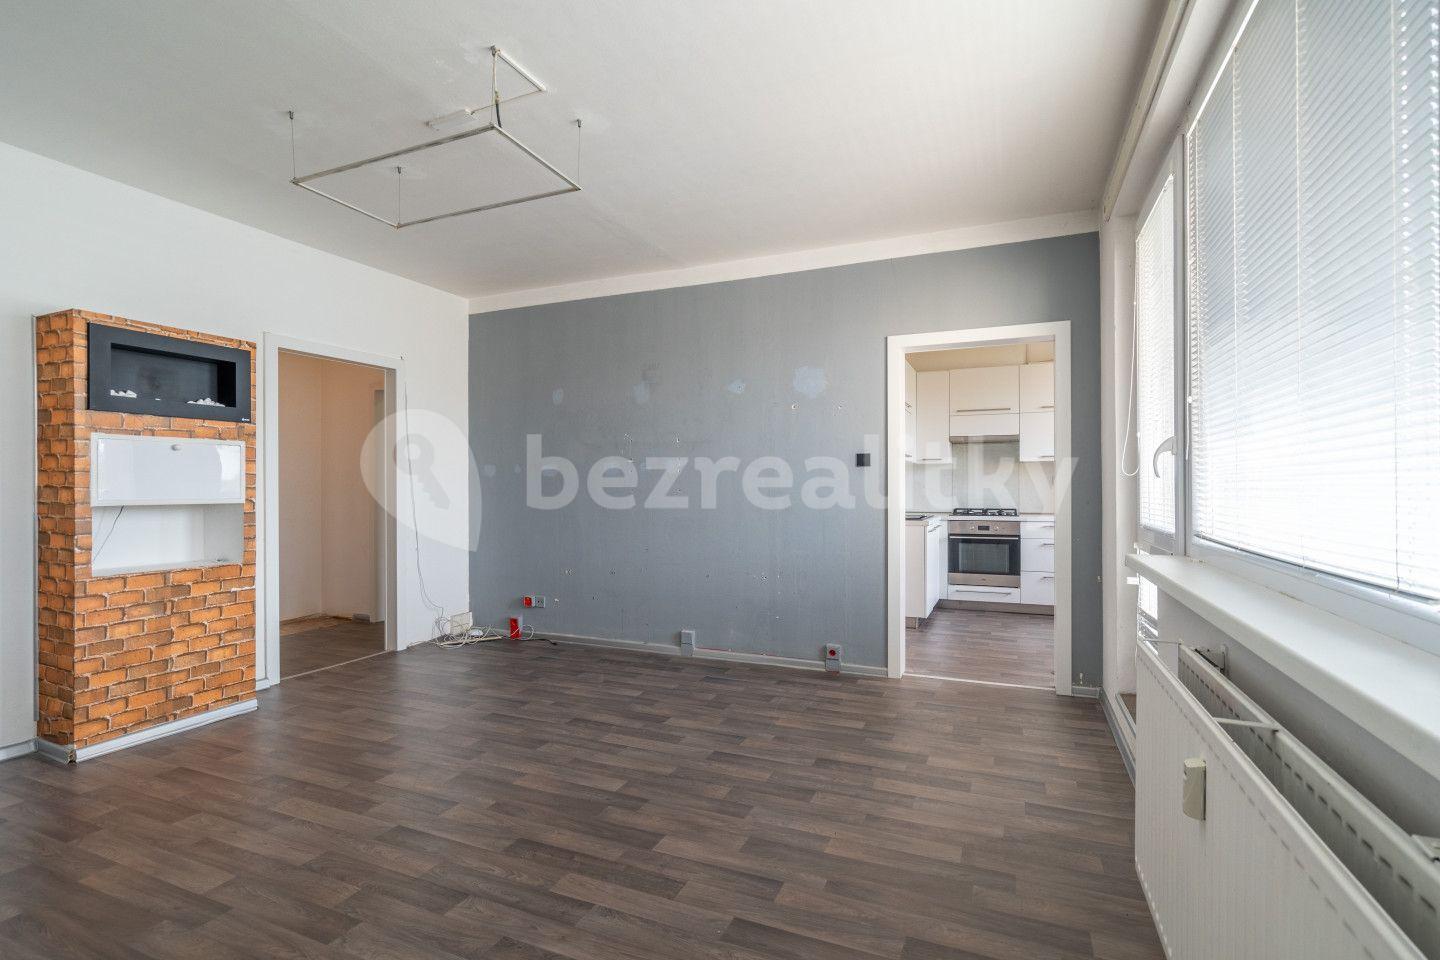 Predaj bytu 4-izbový 75 m², E. Hakena, Krnov, Moravskoslezský kraj